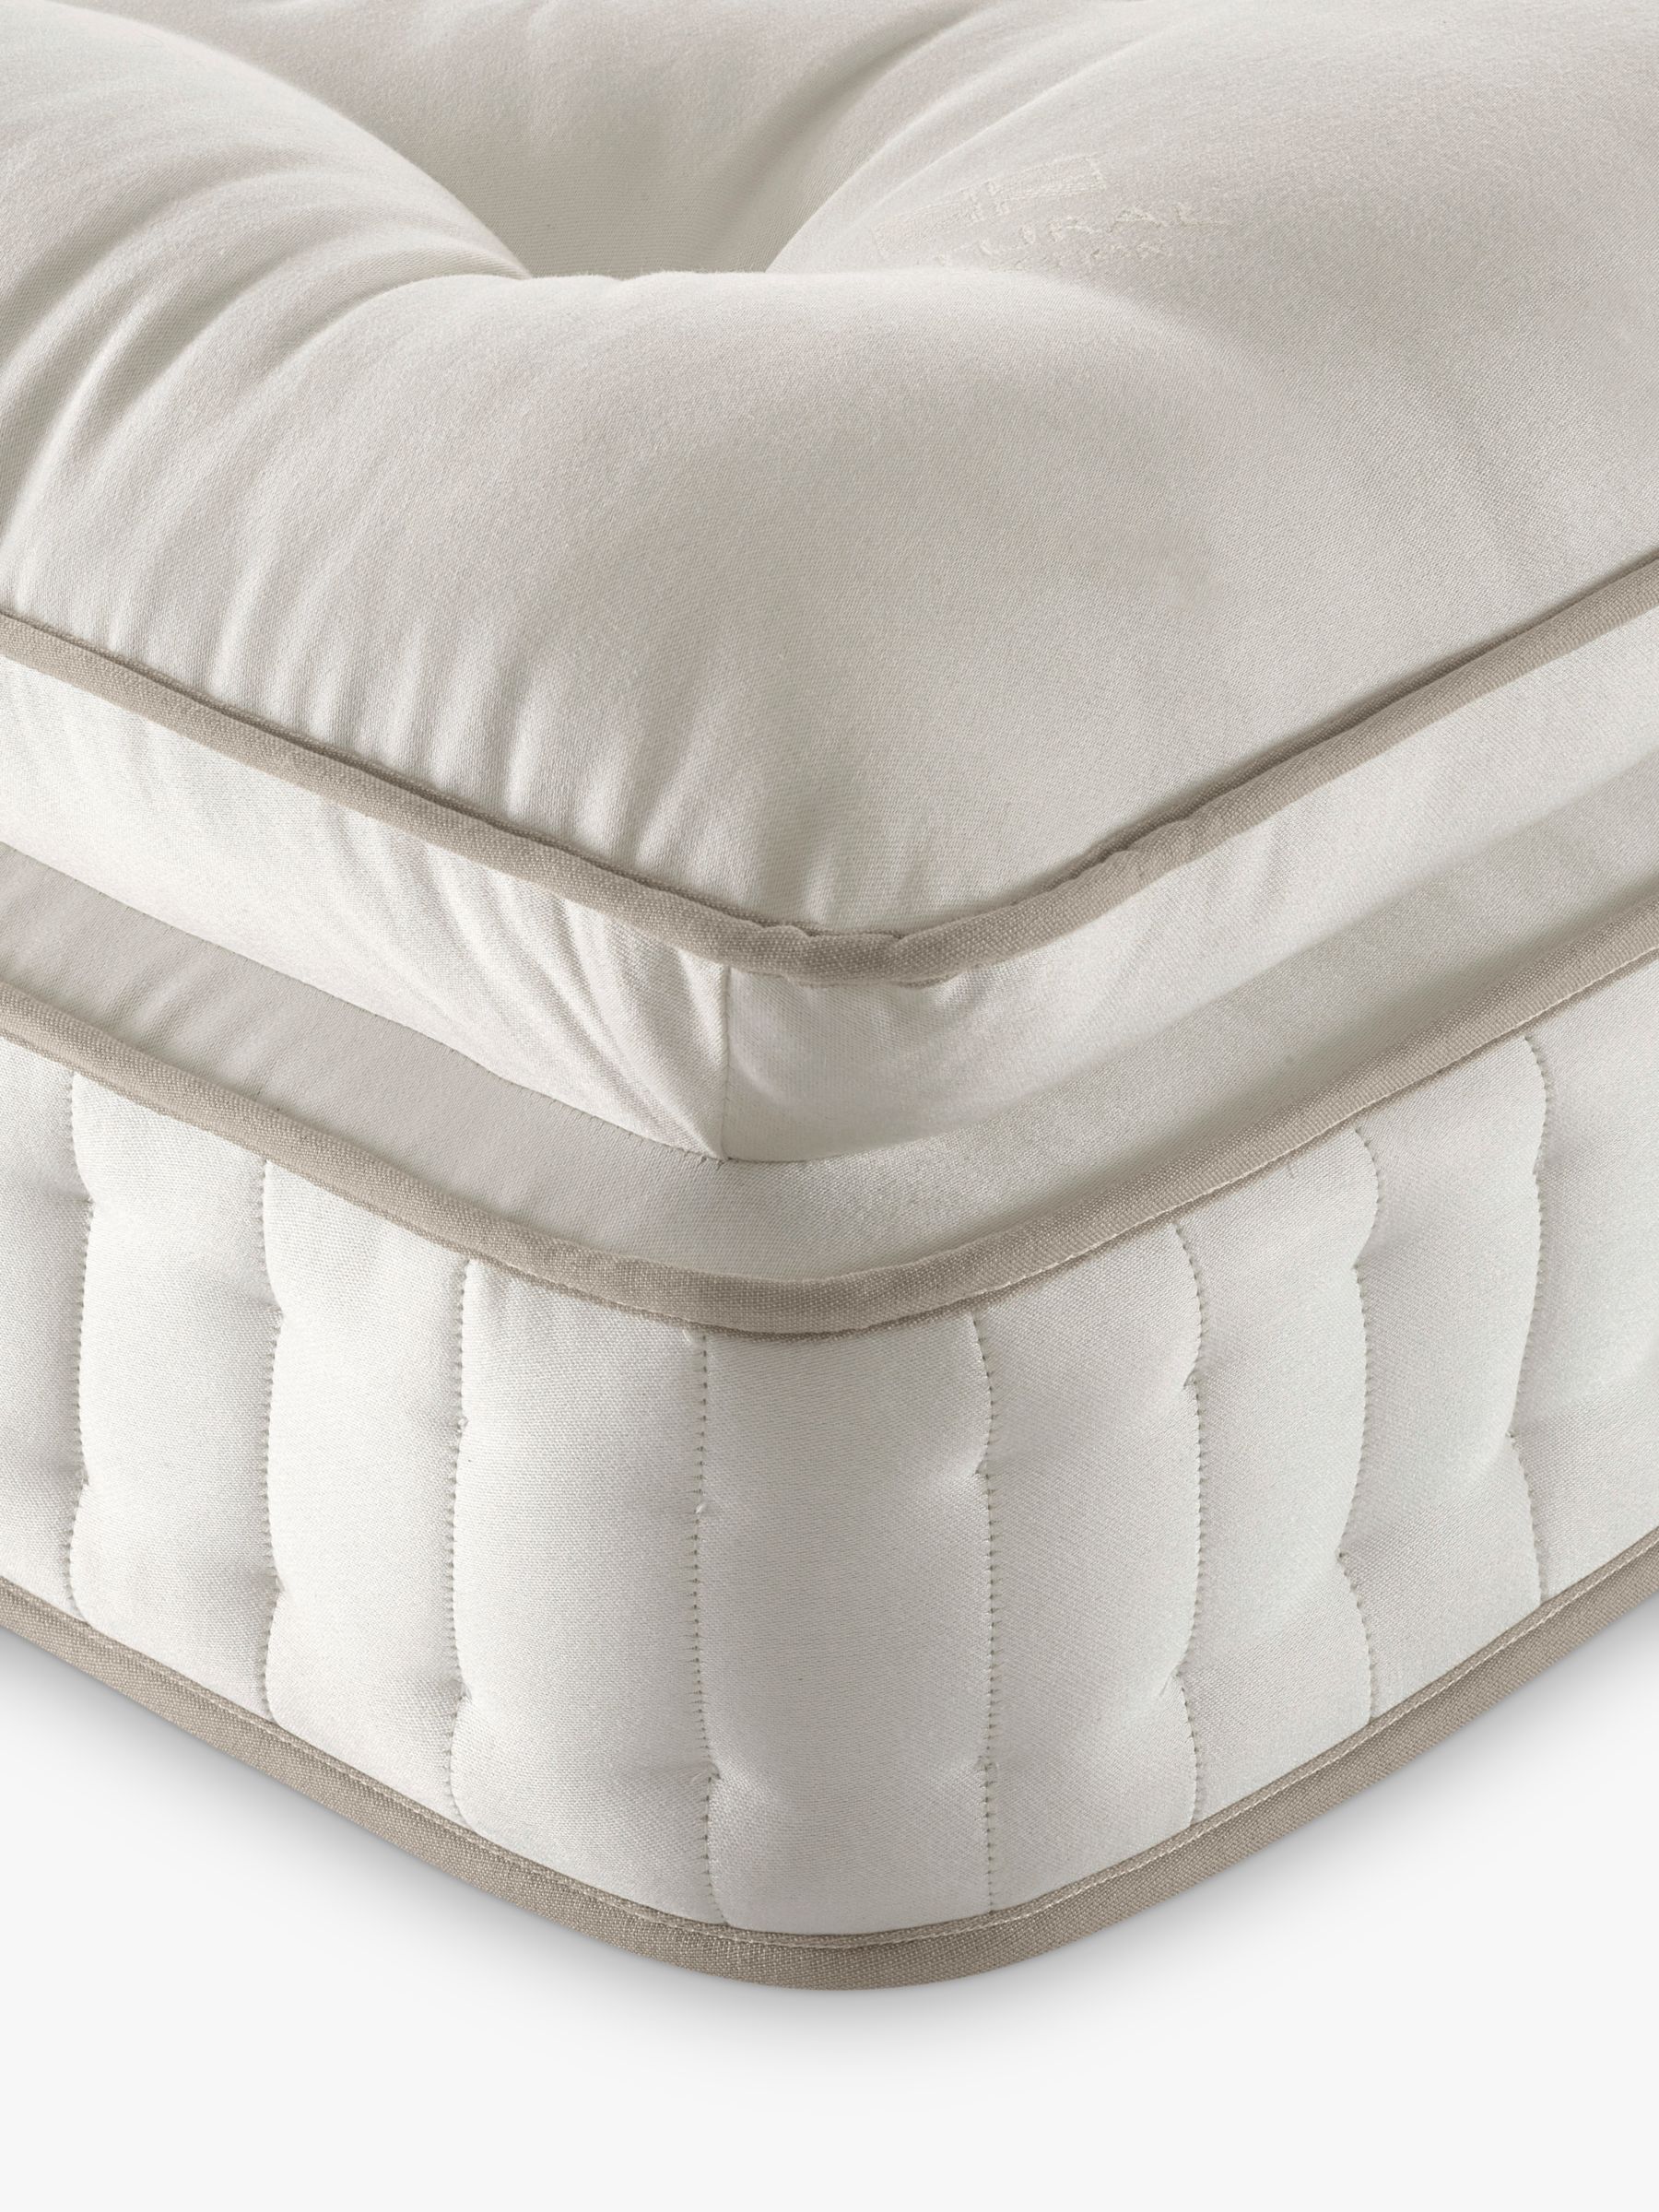 Photo of John lewis luxury natural collection egyptian cotton pillowtop 4250 king size regular tension pocket spring zip link mattress